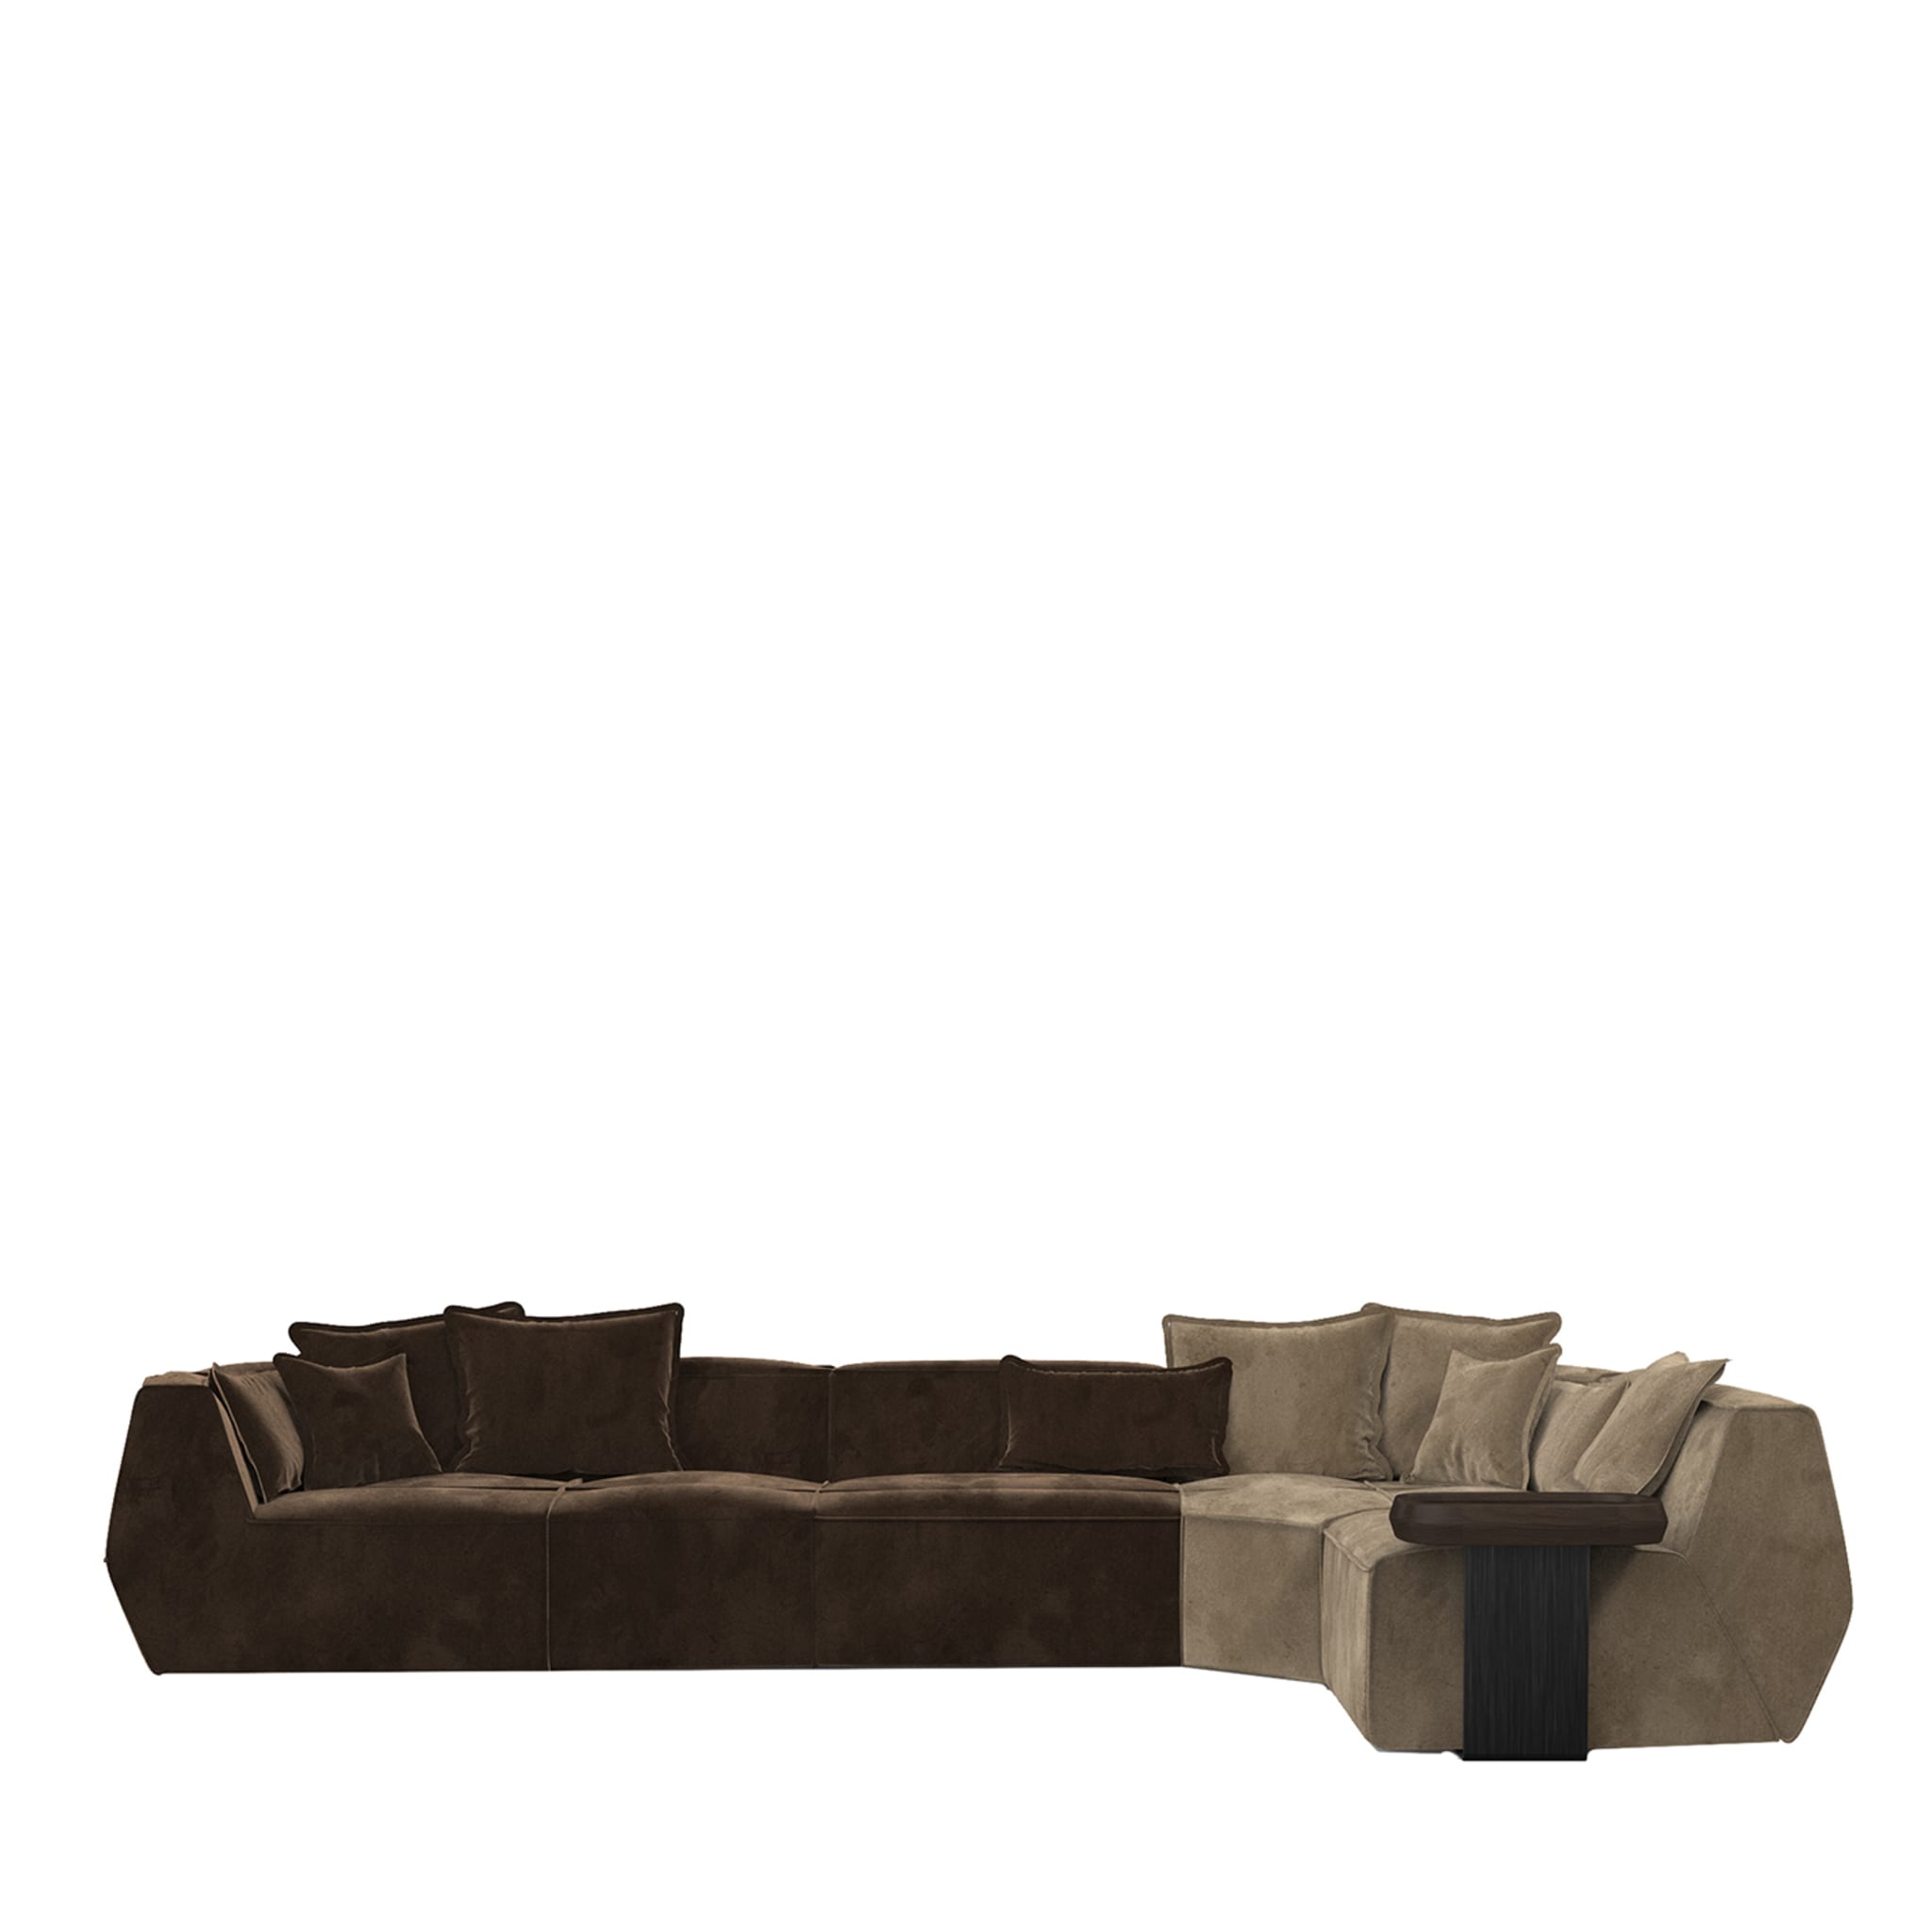 Infinito Two-Tone Brown Leather Sofa by Lorenza Bozzoli #2 - Main view